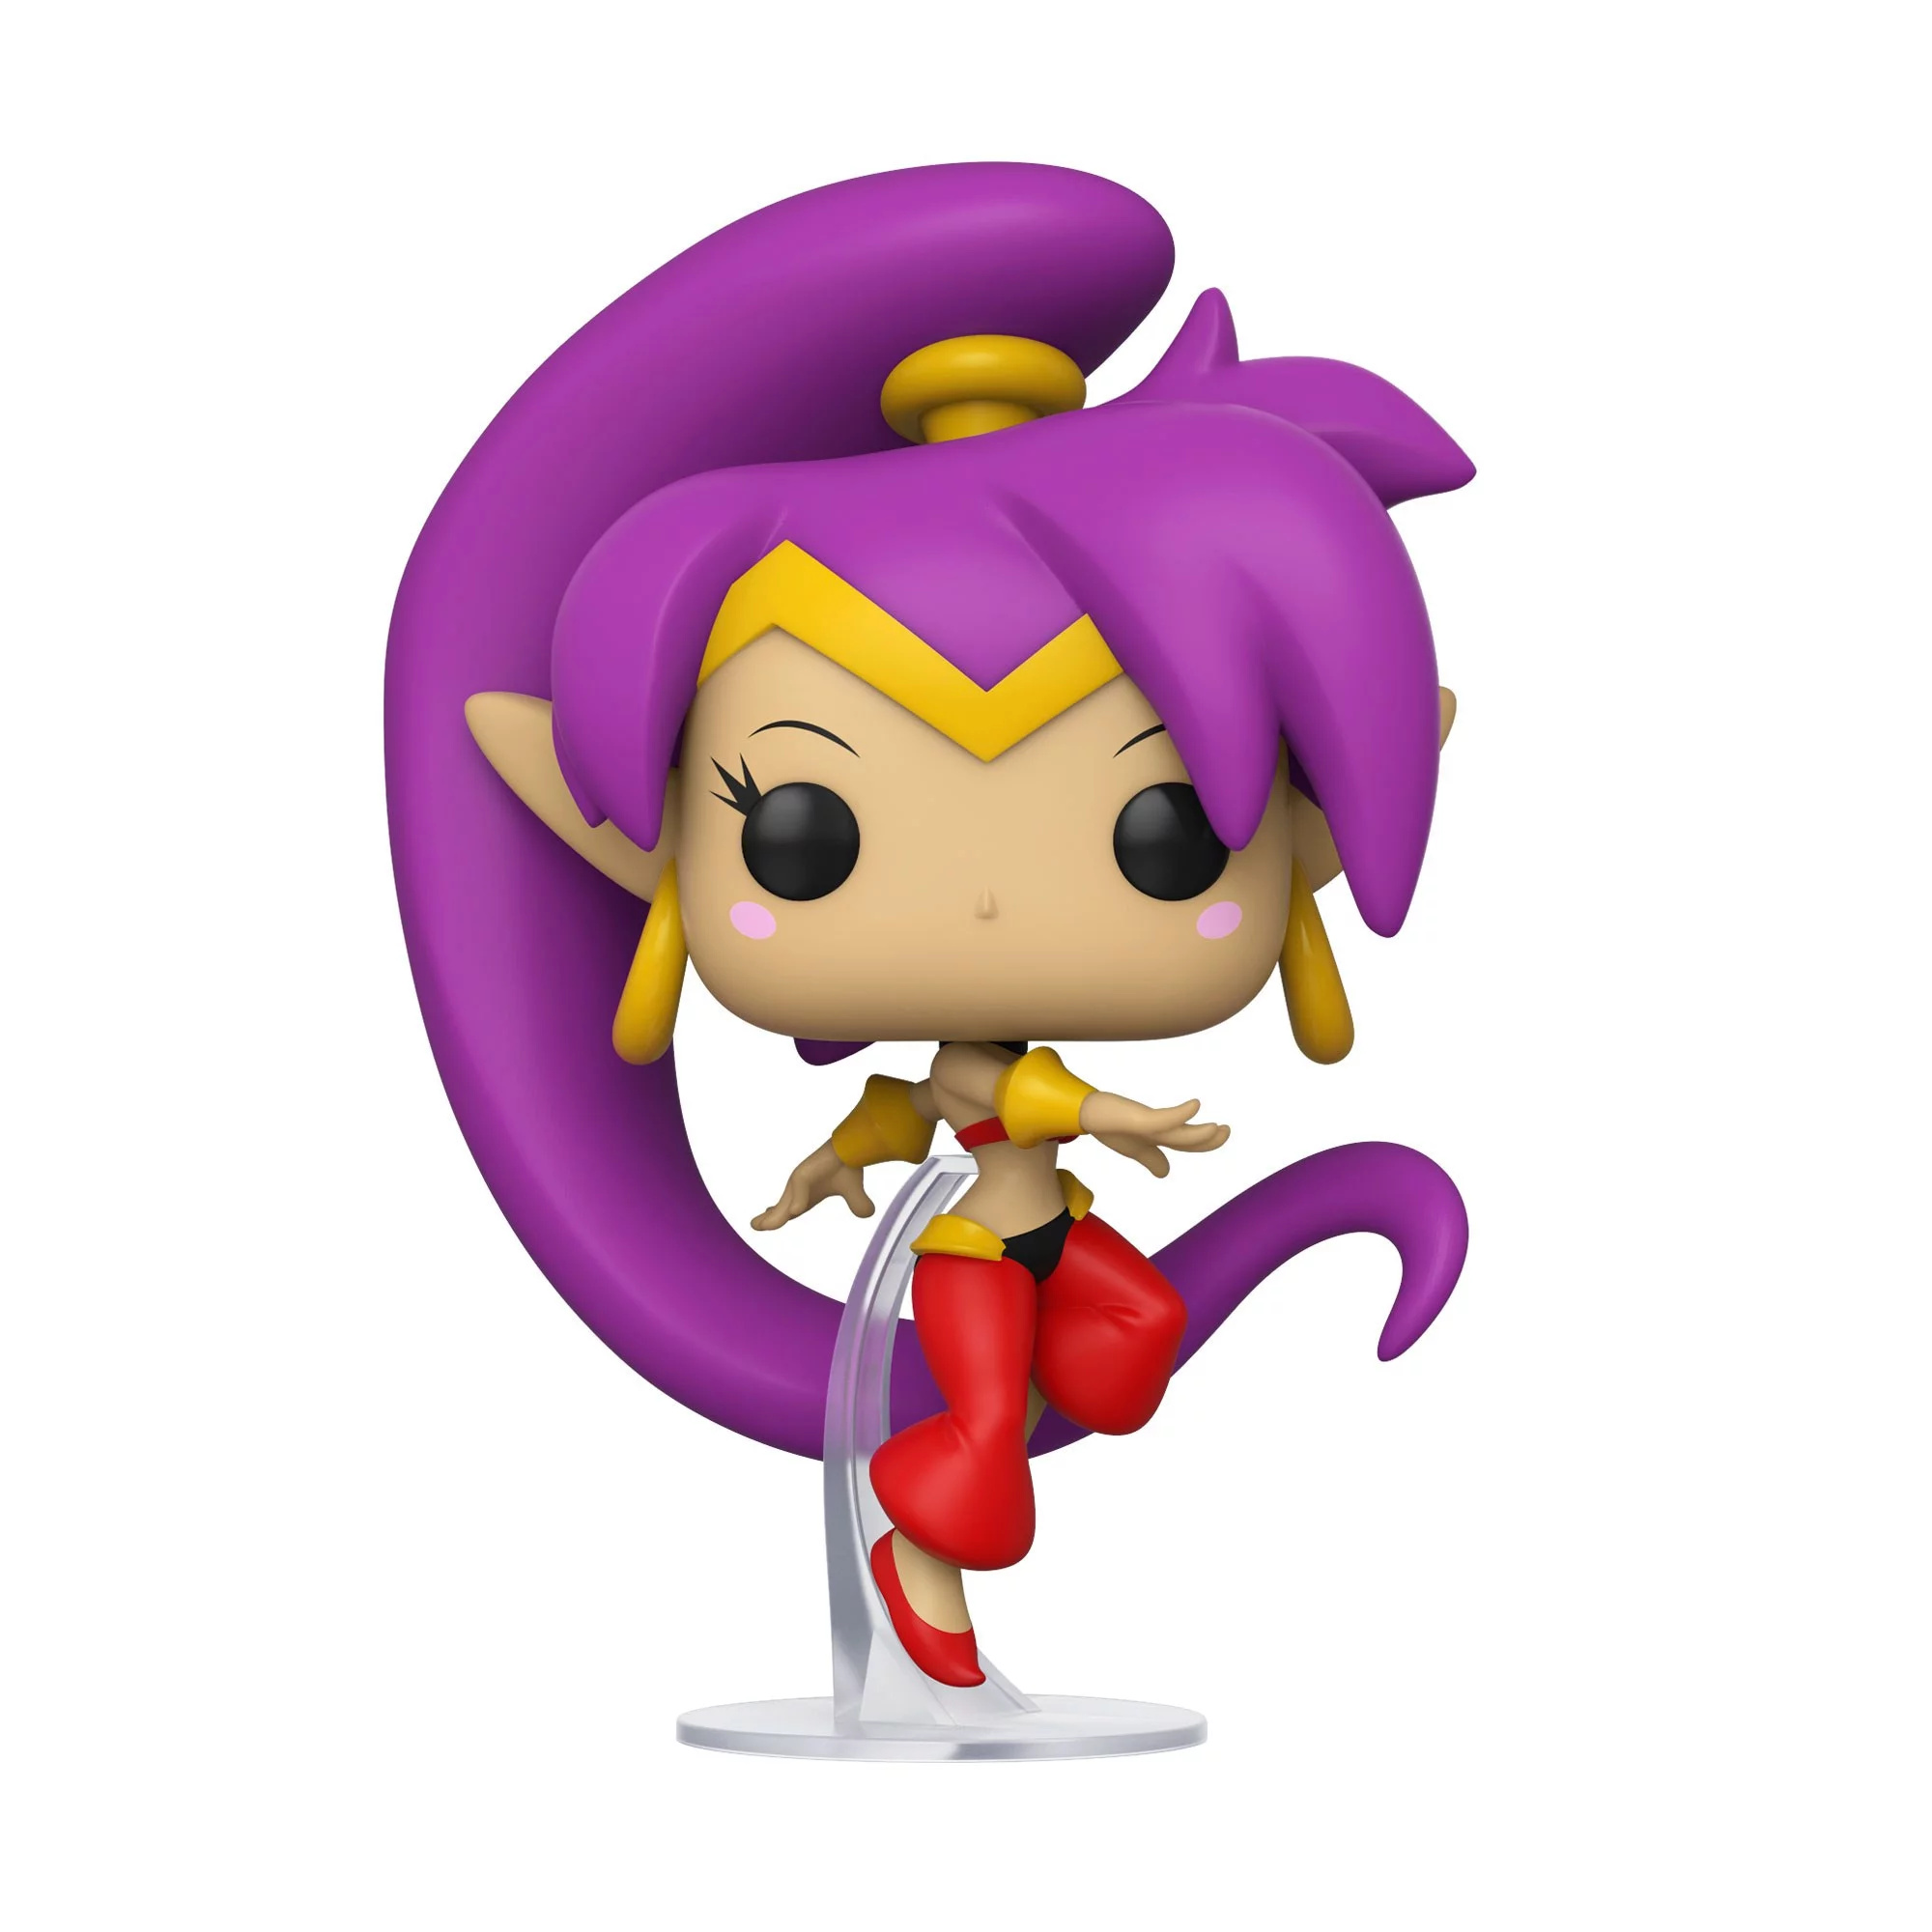 Shantae (Character) - Giant Bomb